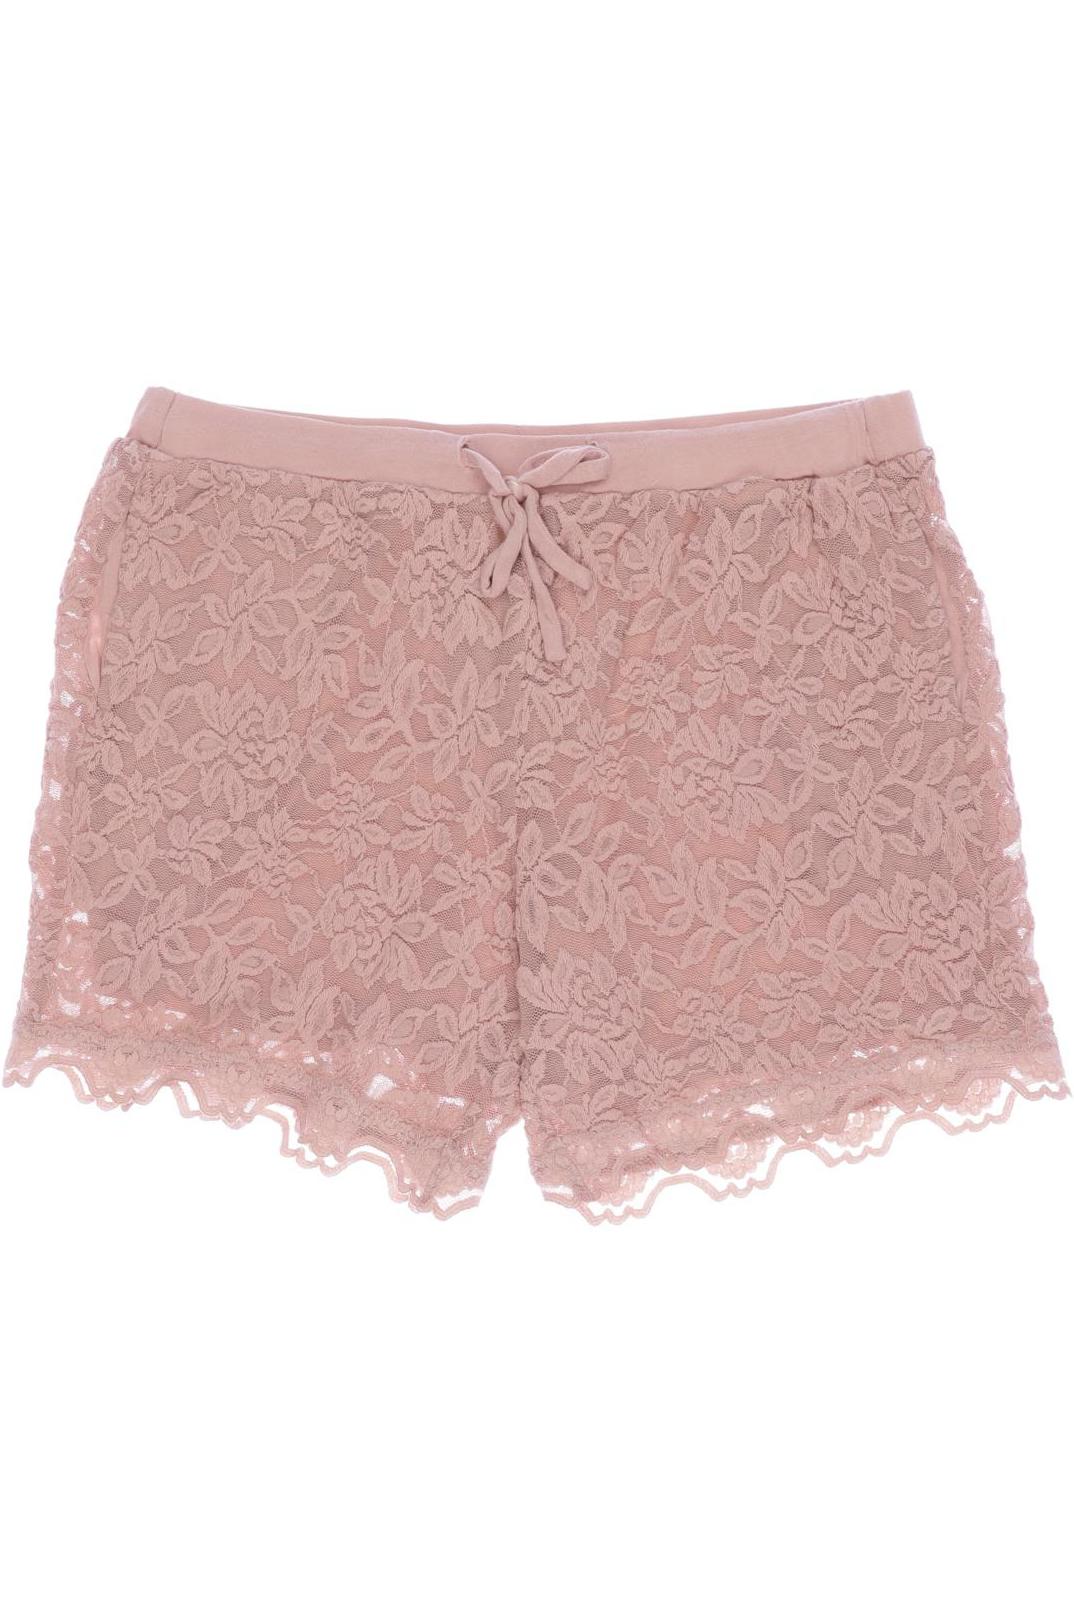 Rosemunde Damen Shorts, pink, Gr. 164 von Rosemunde